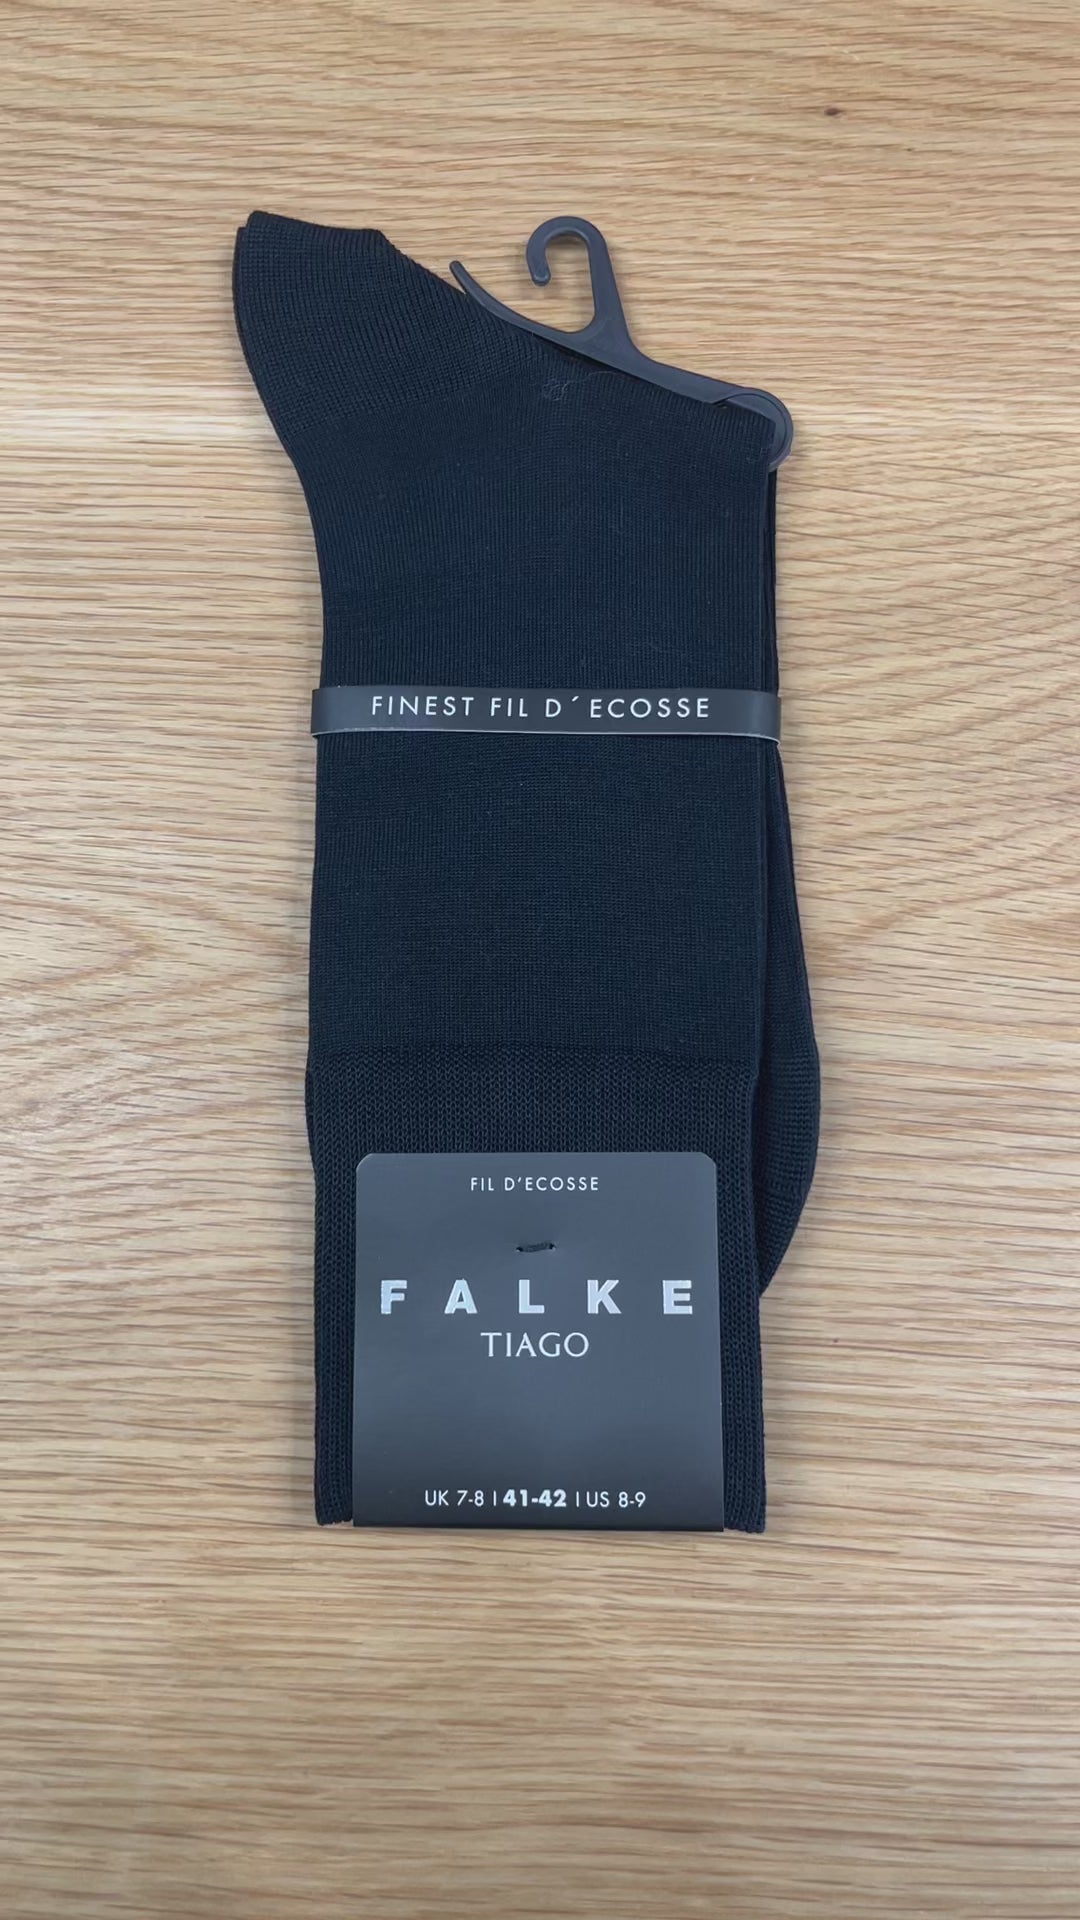 Falke dark navy dress sock